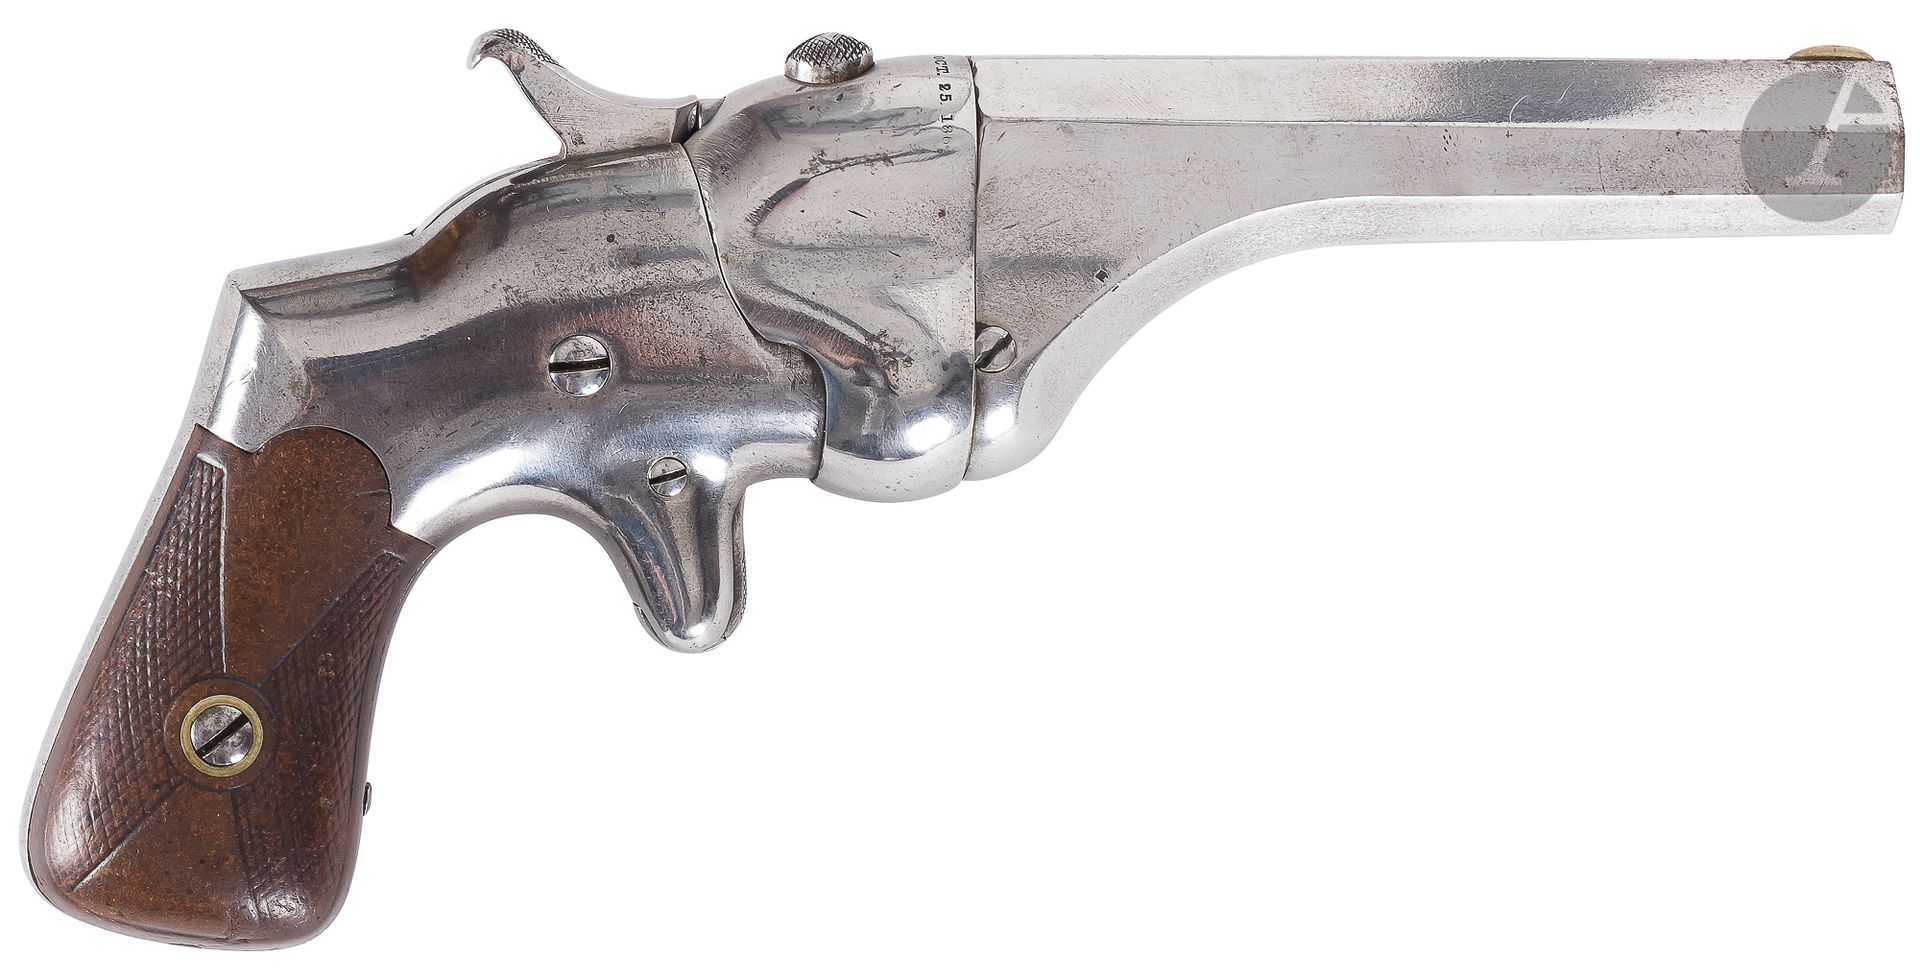 Null 康涅狄格州武器公司的 "斗牛犬 "Ha mmond Derringer手枪，单发，44亨利环规。

有膛线的凹槽枪管，有 "CONNECTICUT A&hellip;